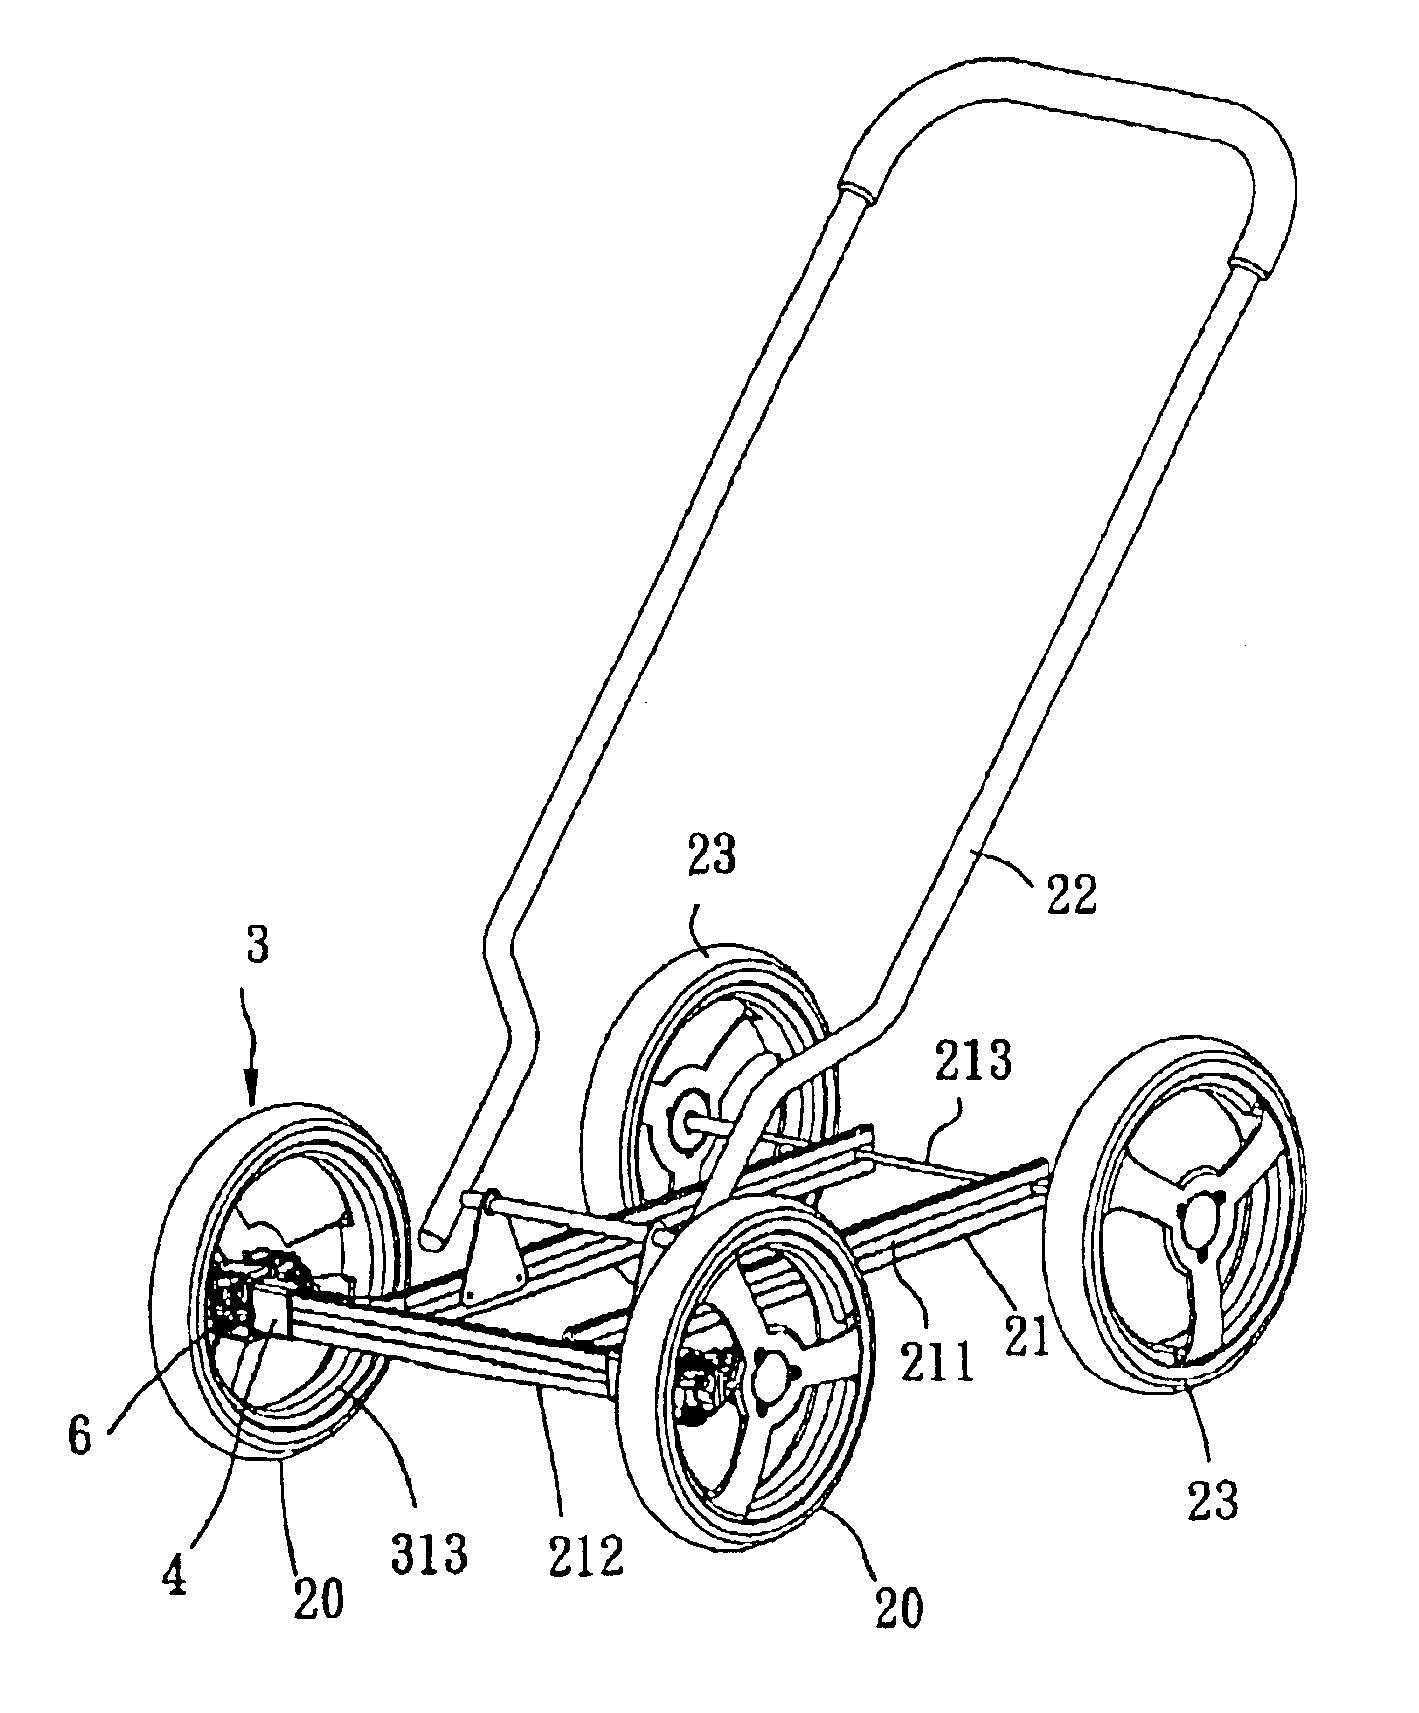 Wheel assembly for a stroller